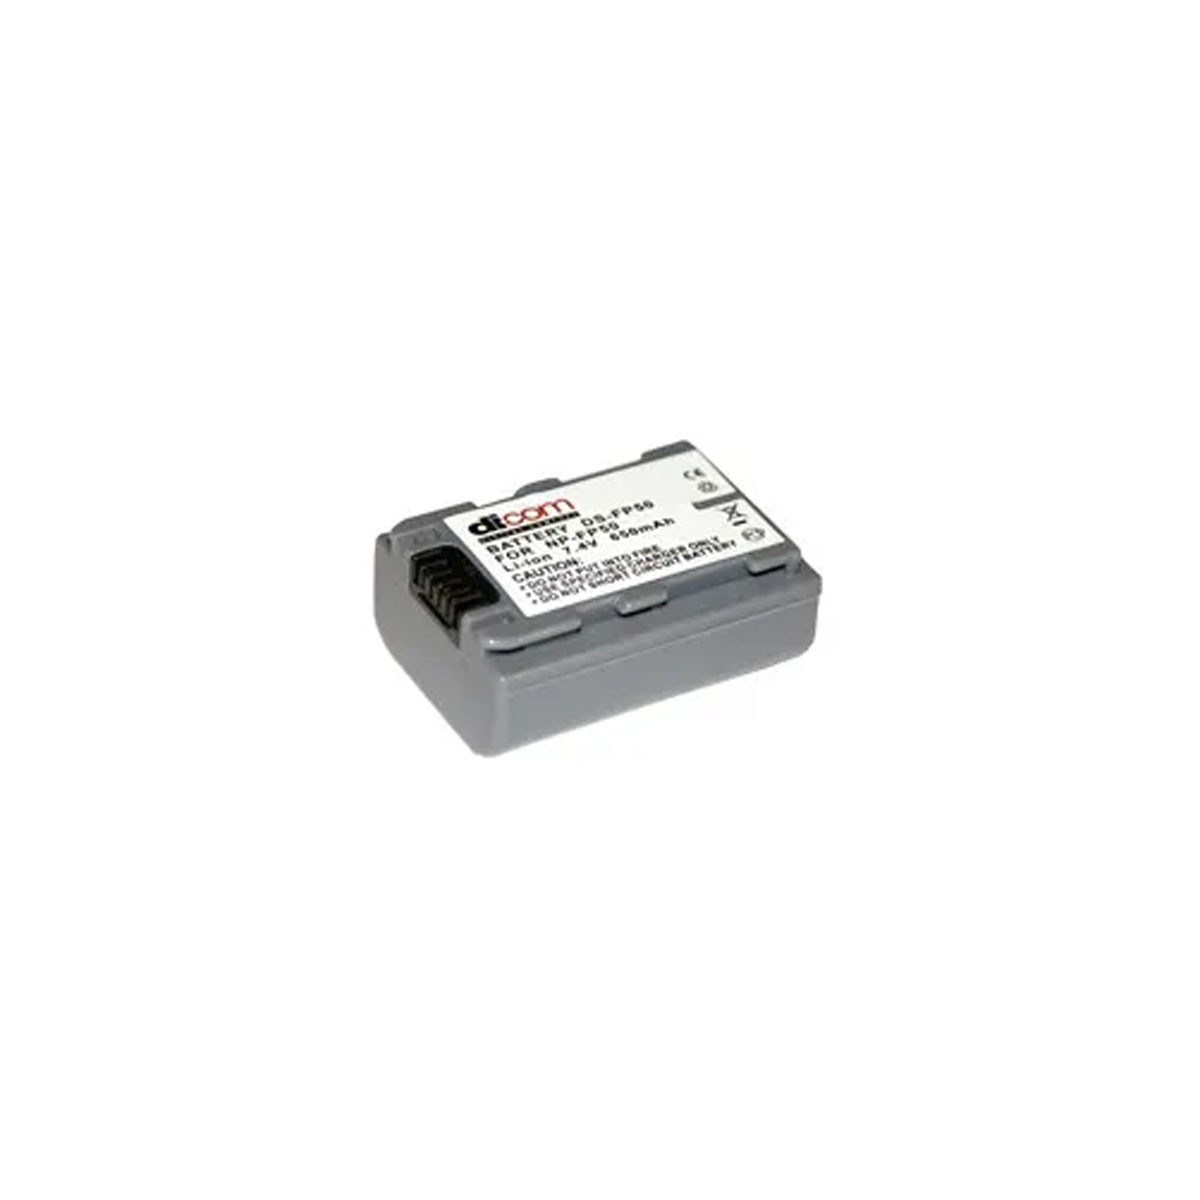 АКБ (Аккумулятор) DICOM NP-FP50 для фото и видеокамер SONY, 650mAh, 7.4V, цвет серый